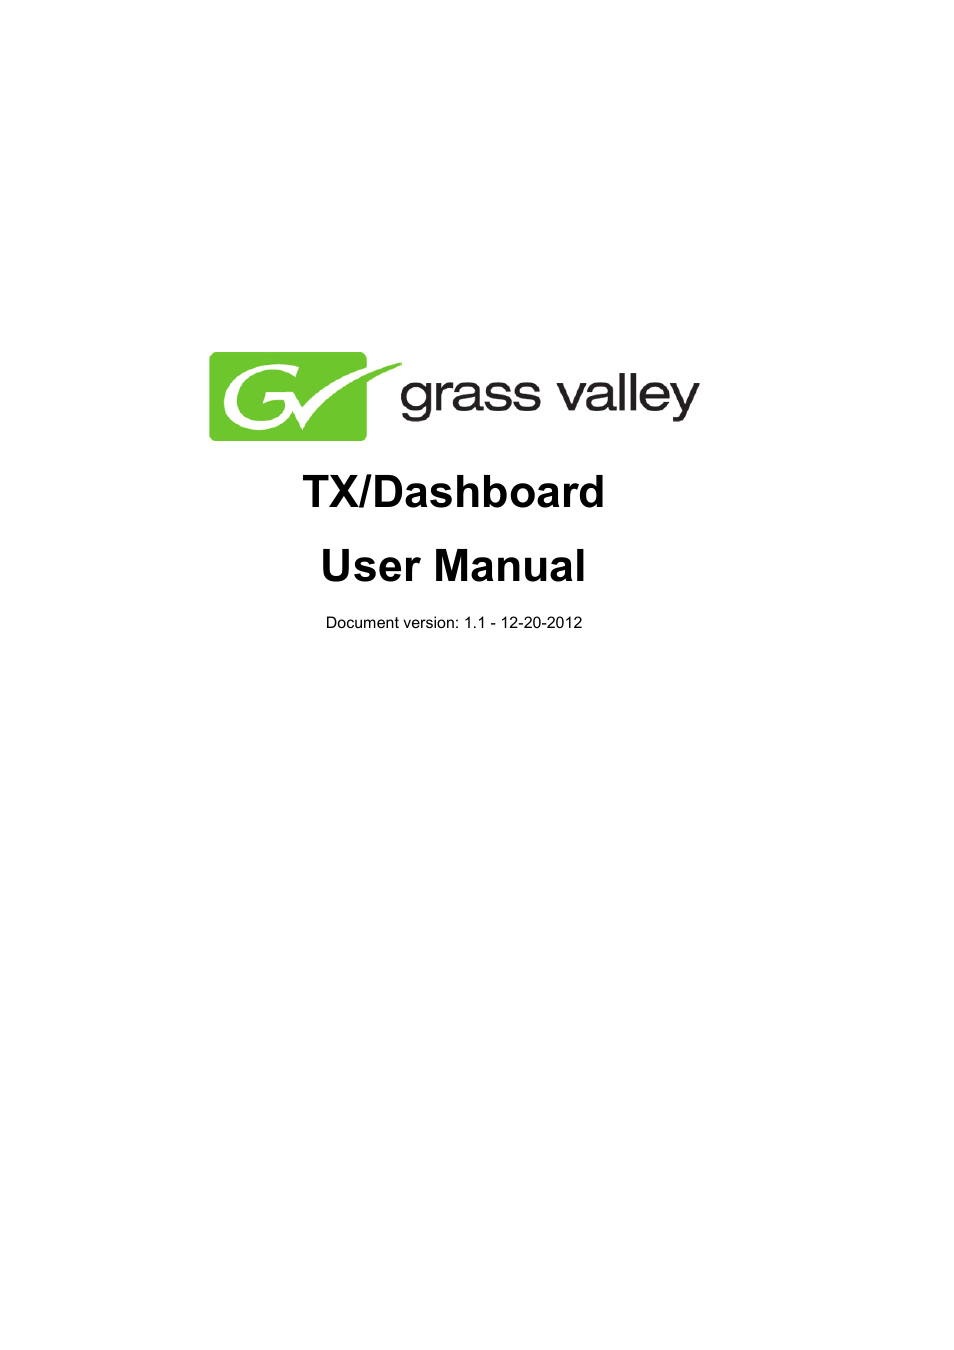 K2 TX/Dashboard User Manual v.1.1